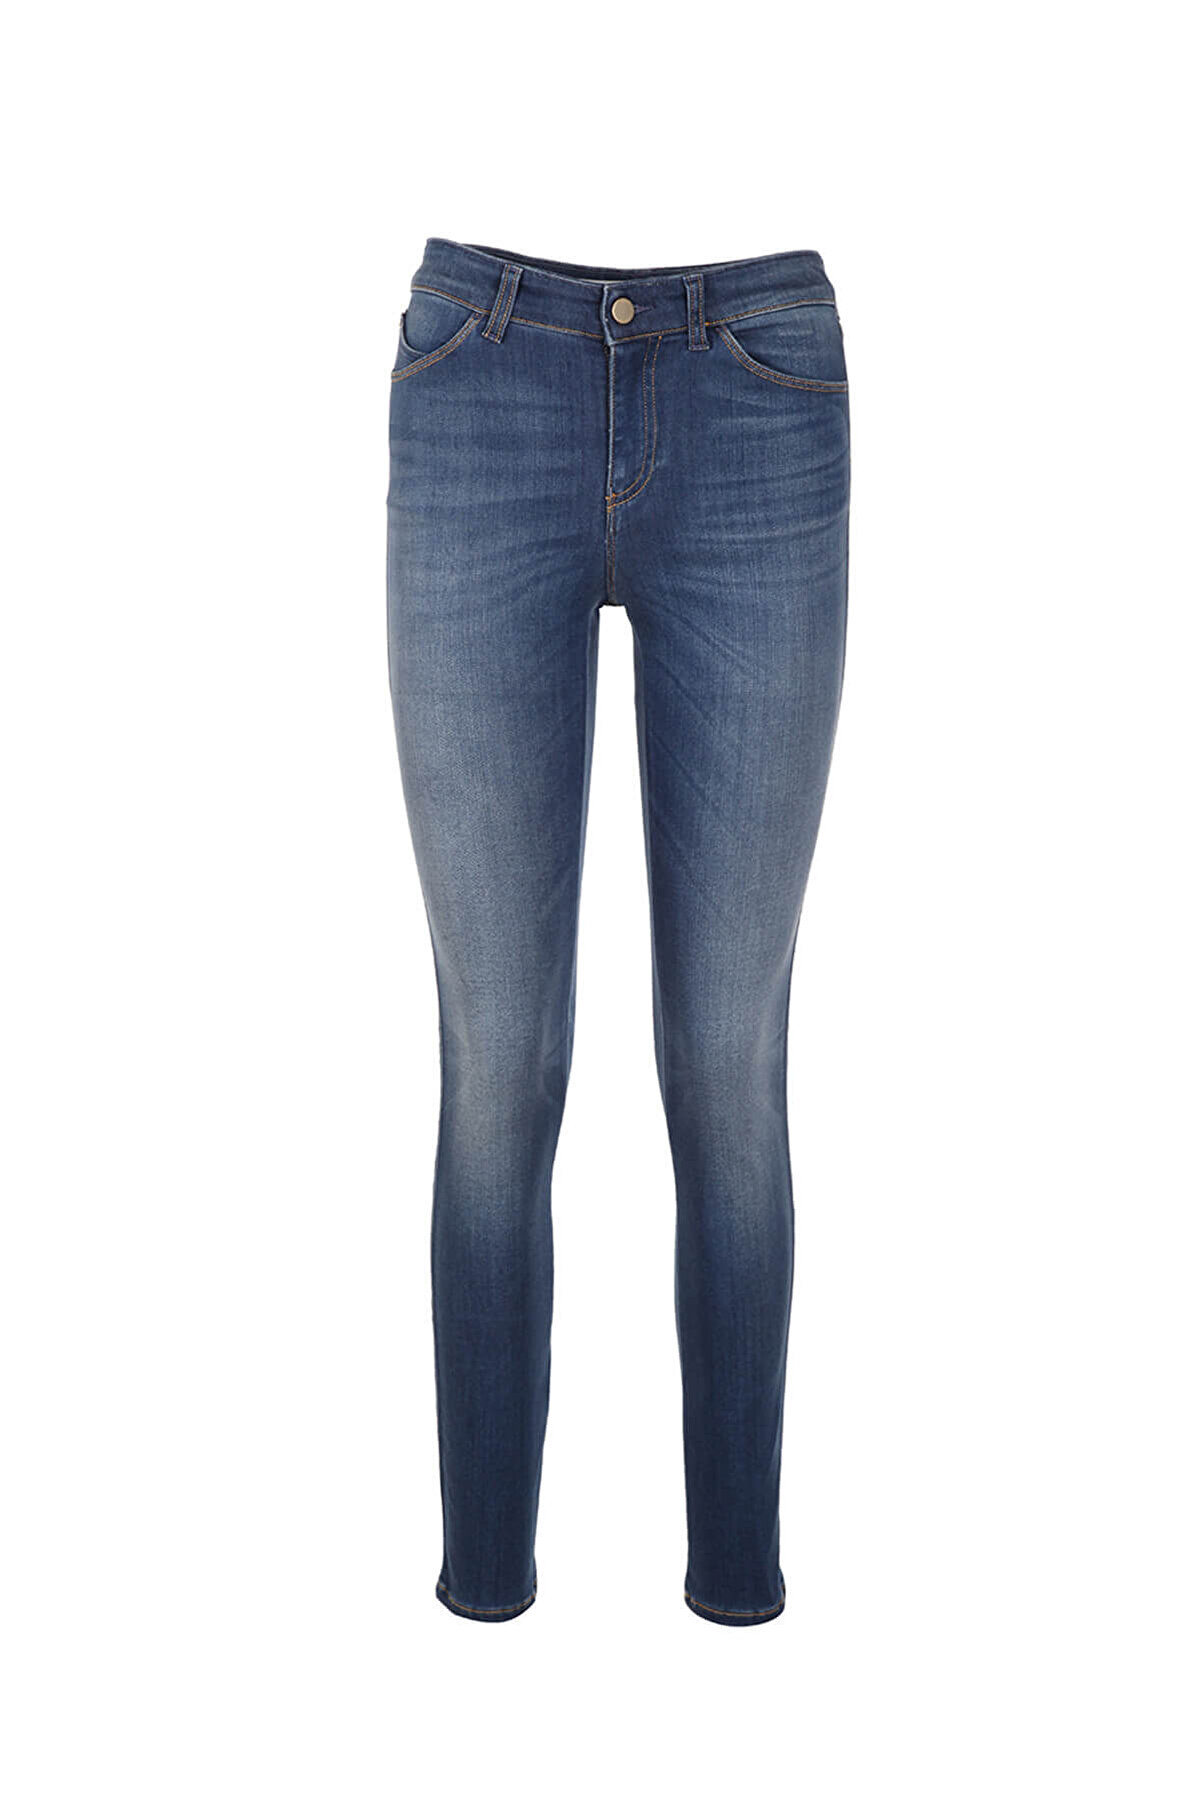 Armani Jeans Kadın Mavi Jean 3Y5J185D0Zz